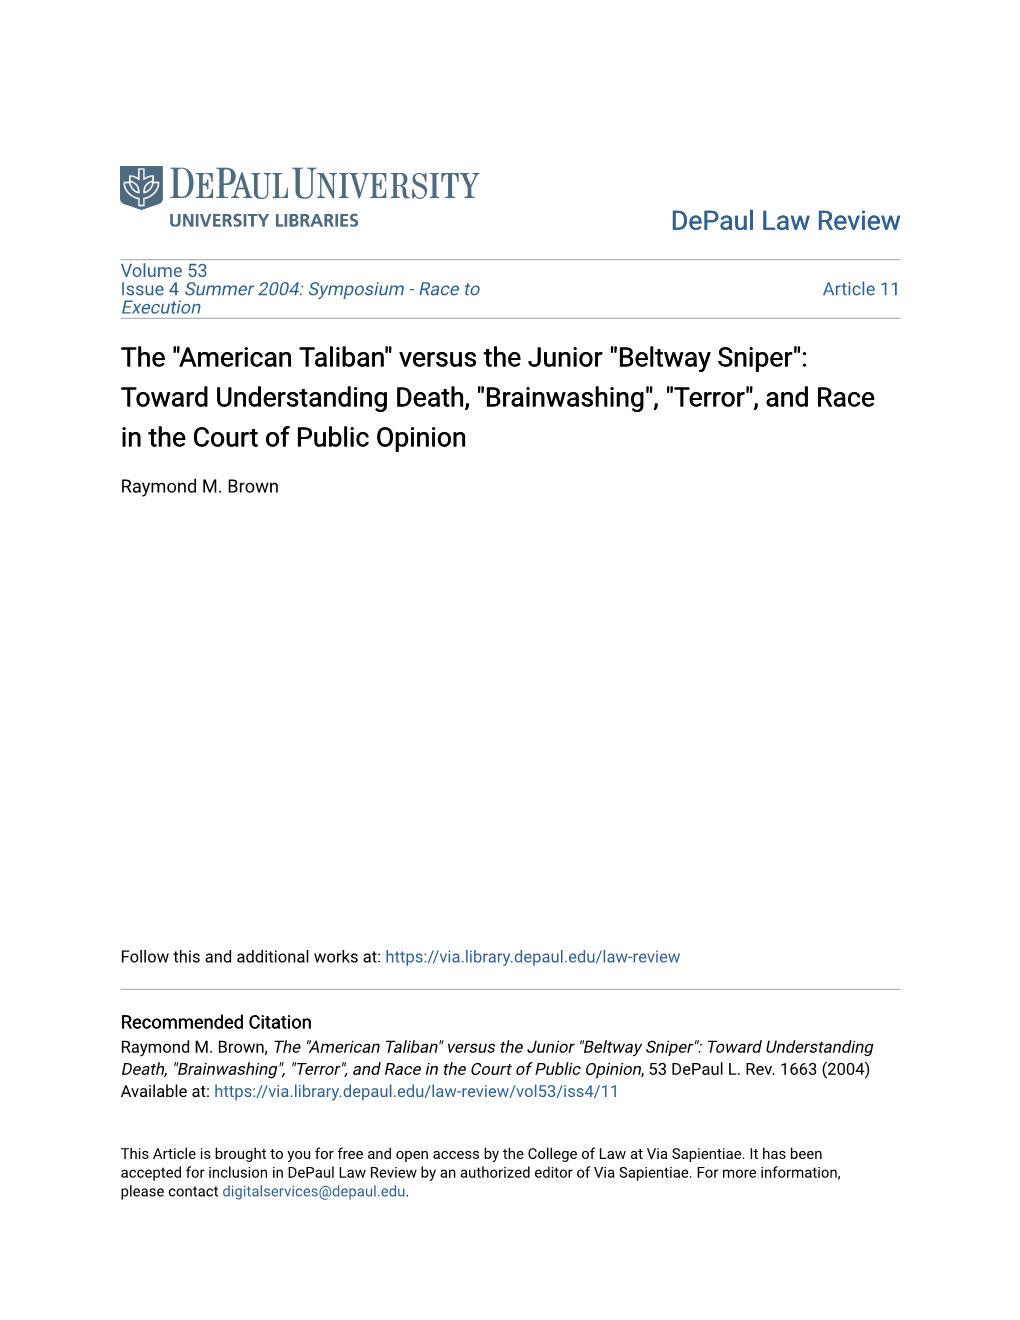 "American Taliban" Versus the Junior "Beltway Sniper": Toward Understanding Death, "Brainwashing", "Terror", and Race in the Court of Public Opinion